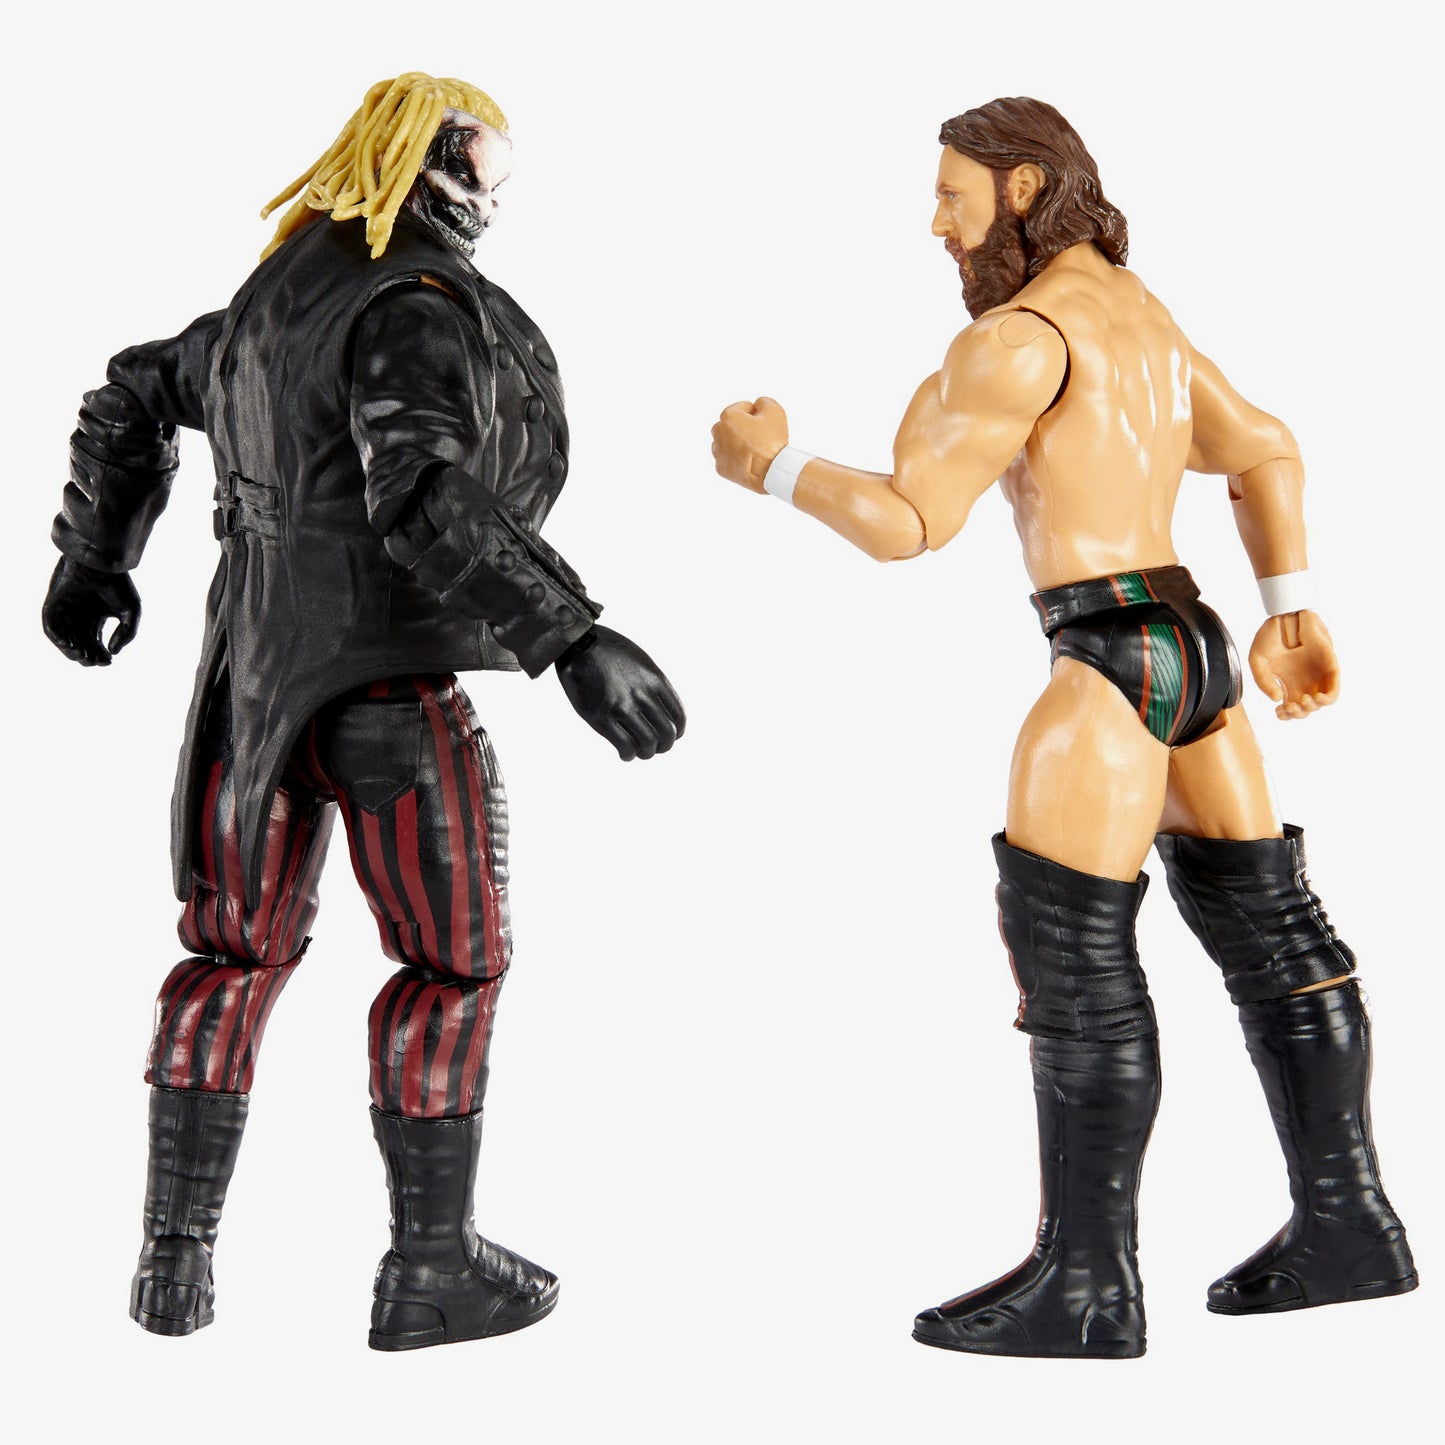 The Fiend Bray Wyatt & Daniel Bryan - WWE Championship Showdown 2-Pack Series #3